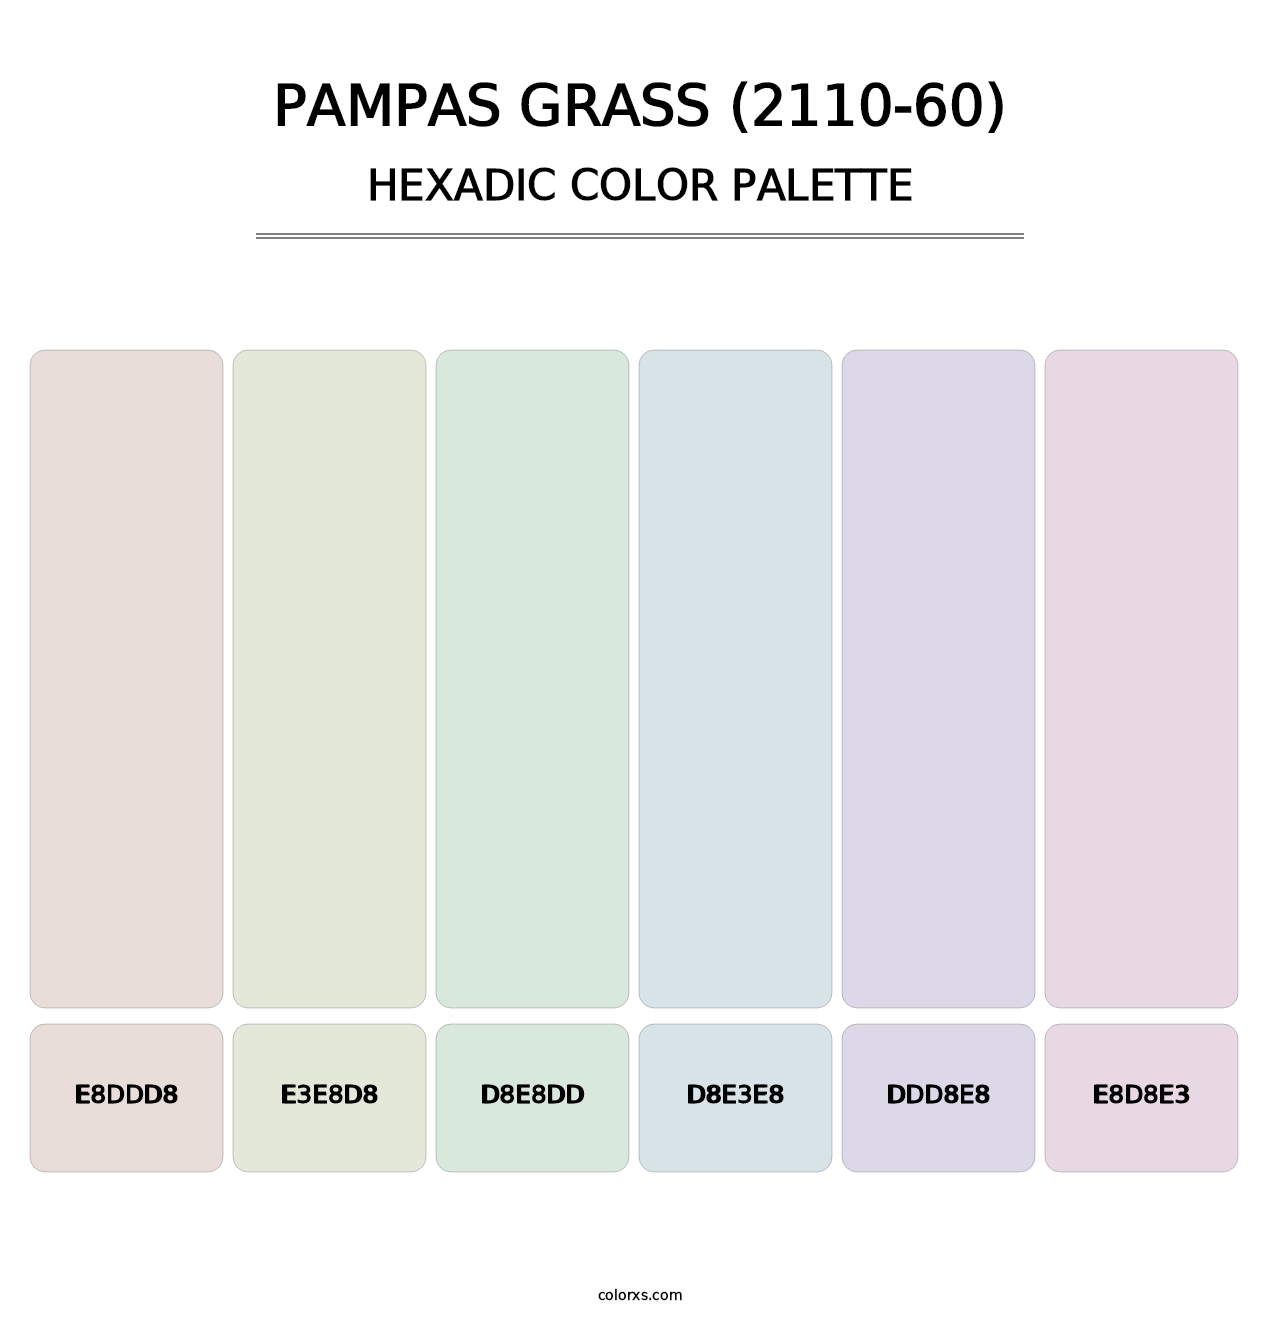 Pampas Grass (2110-60) - Hexadic Color Palette